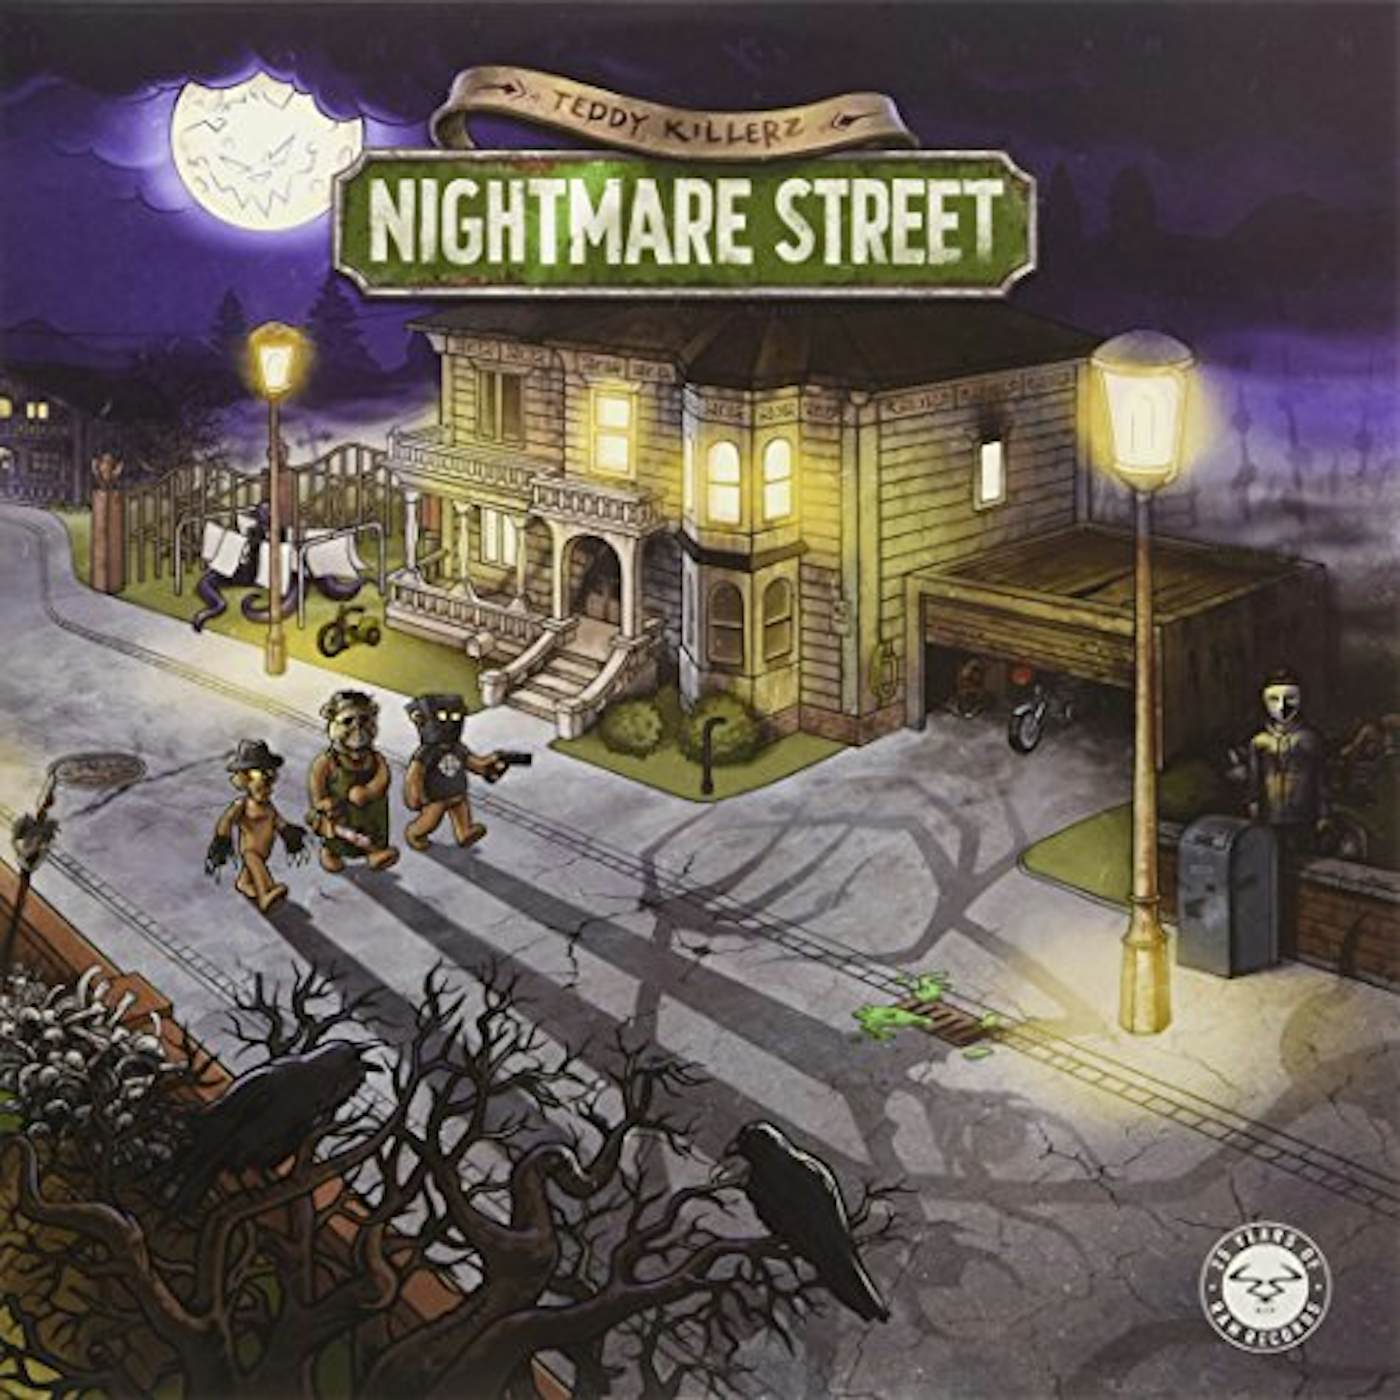 Teddy Killerz Nightmare Street Vinyl Record